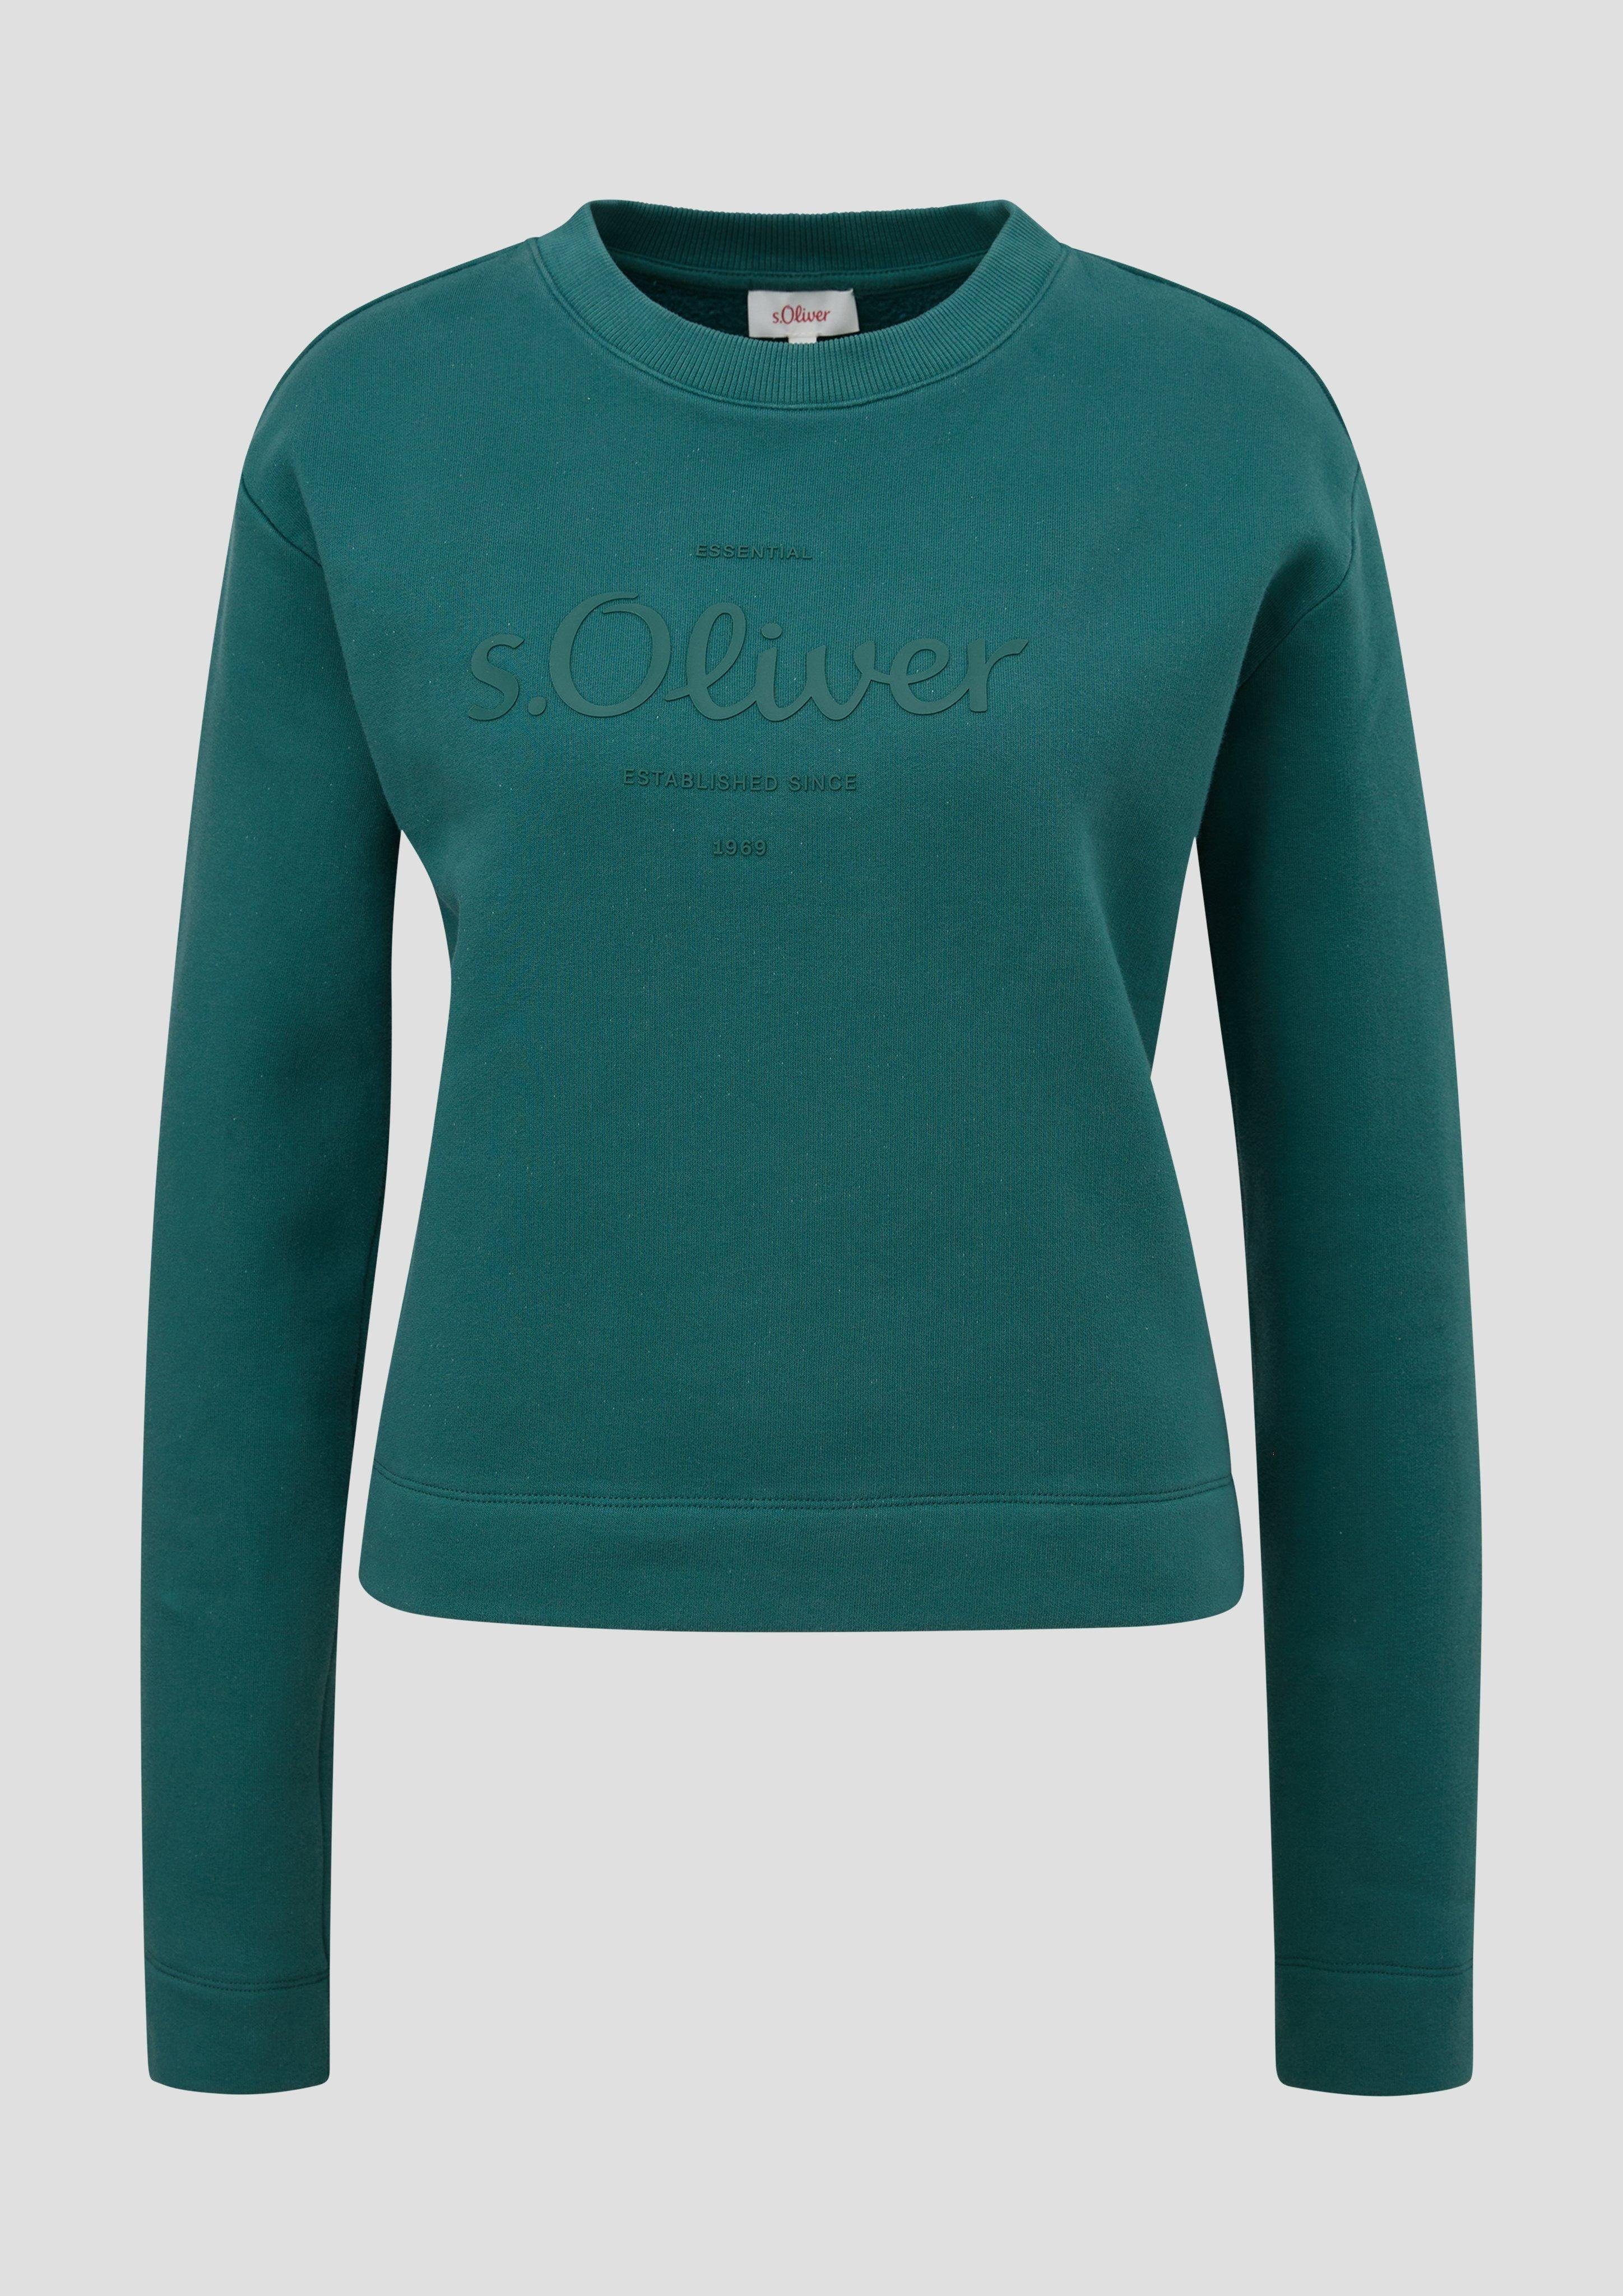 Sweatshirt Sweatshirt s.Oliver Logo-Print mit petrol